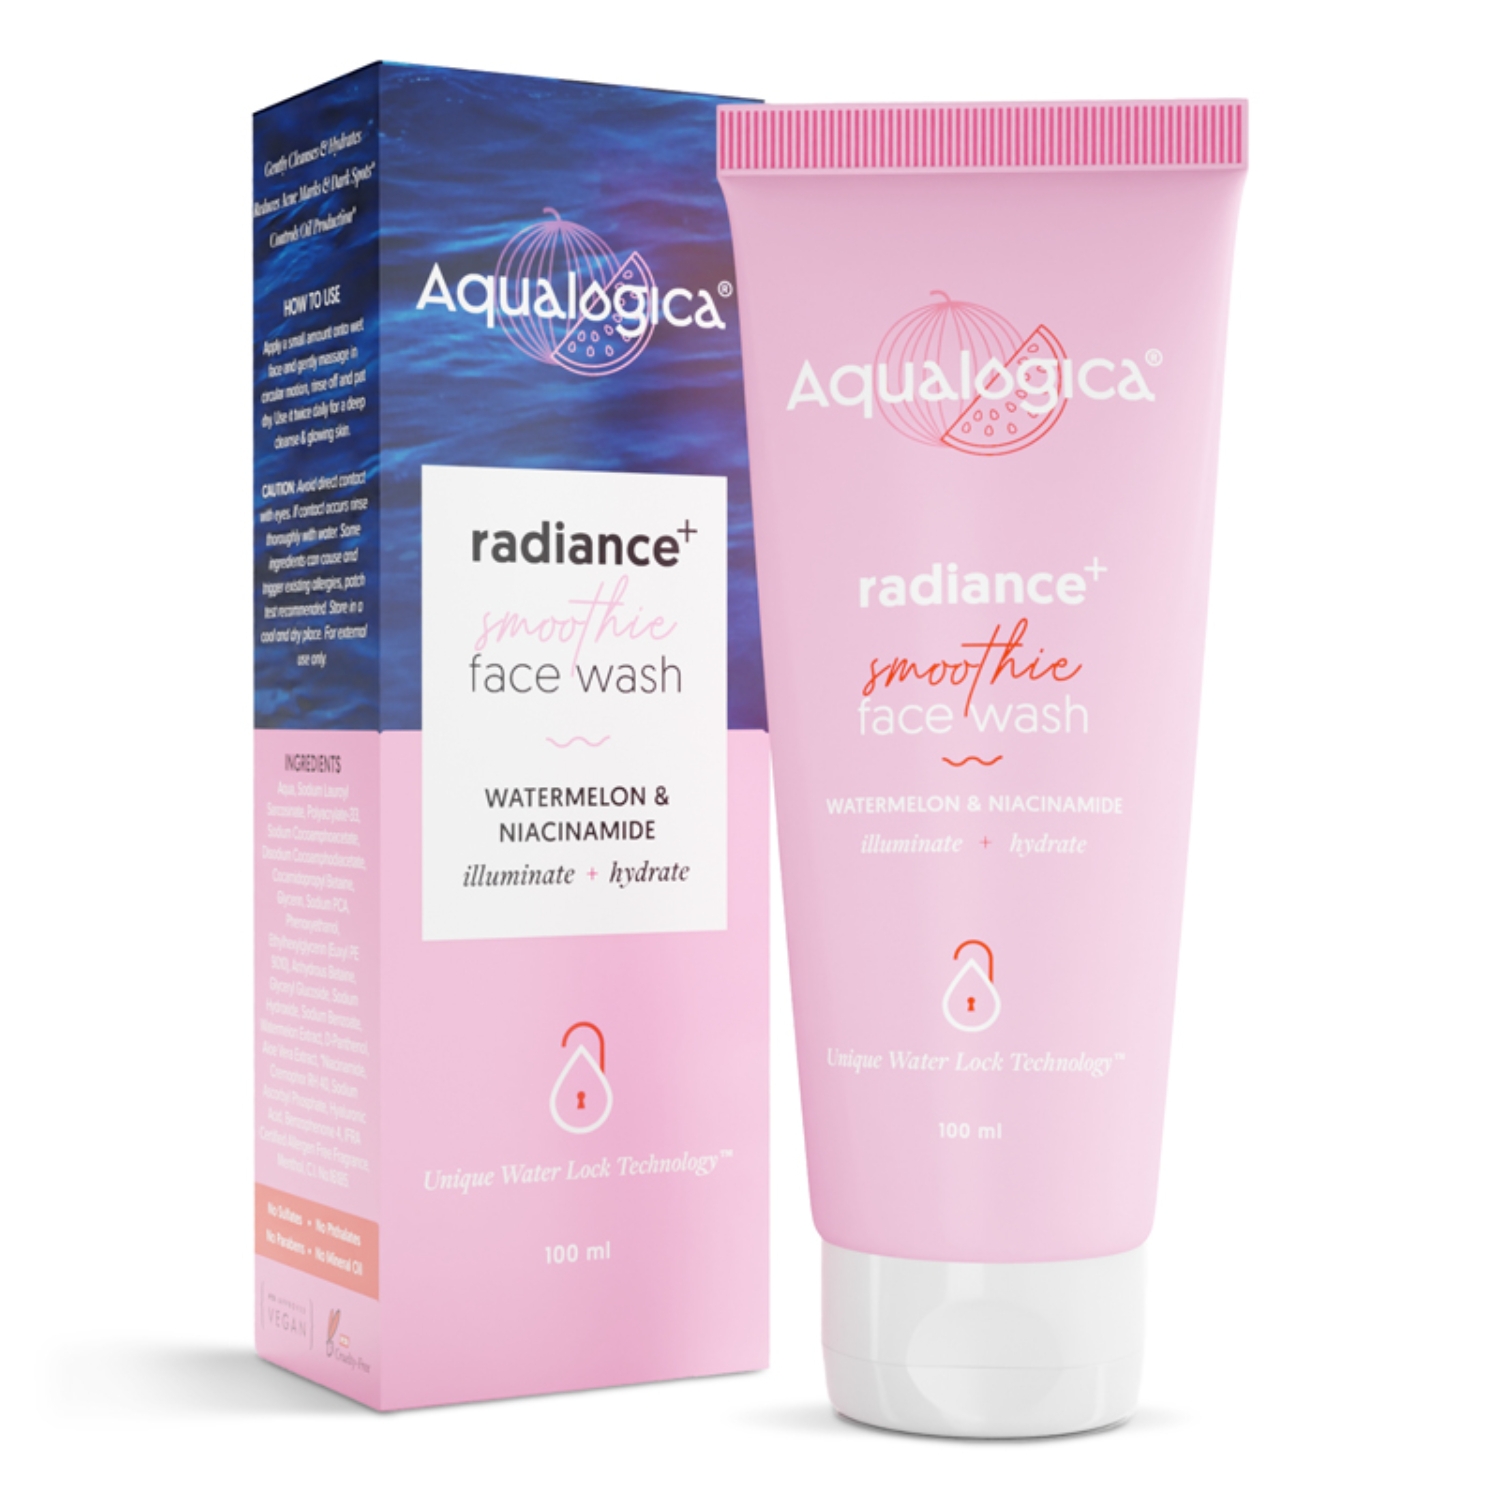 Aqualogica | Aqualogica Radiance+ Smoothie Face Wash (100ml)